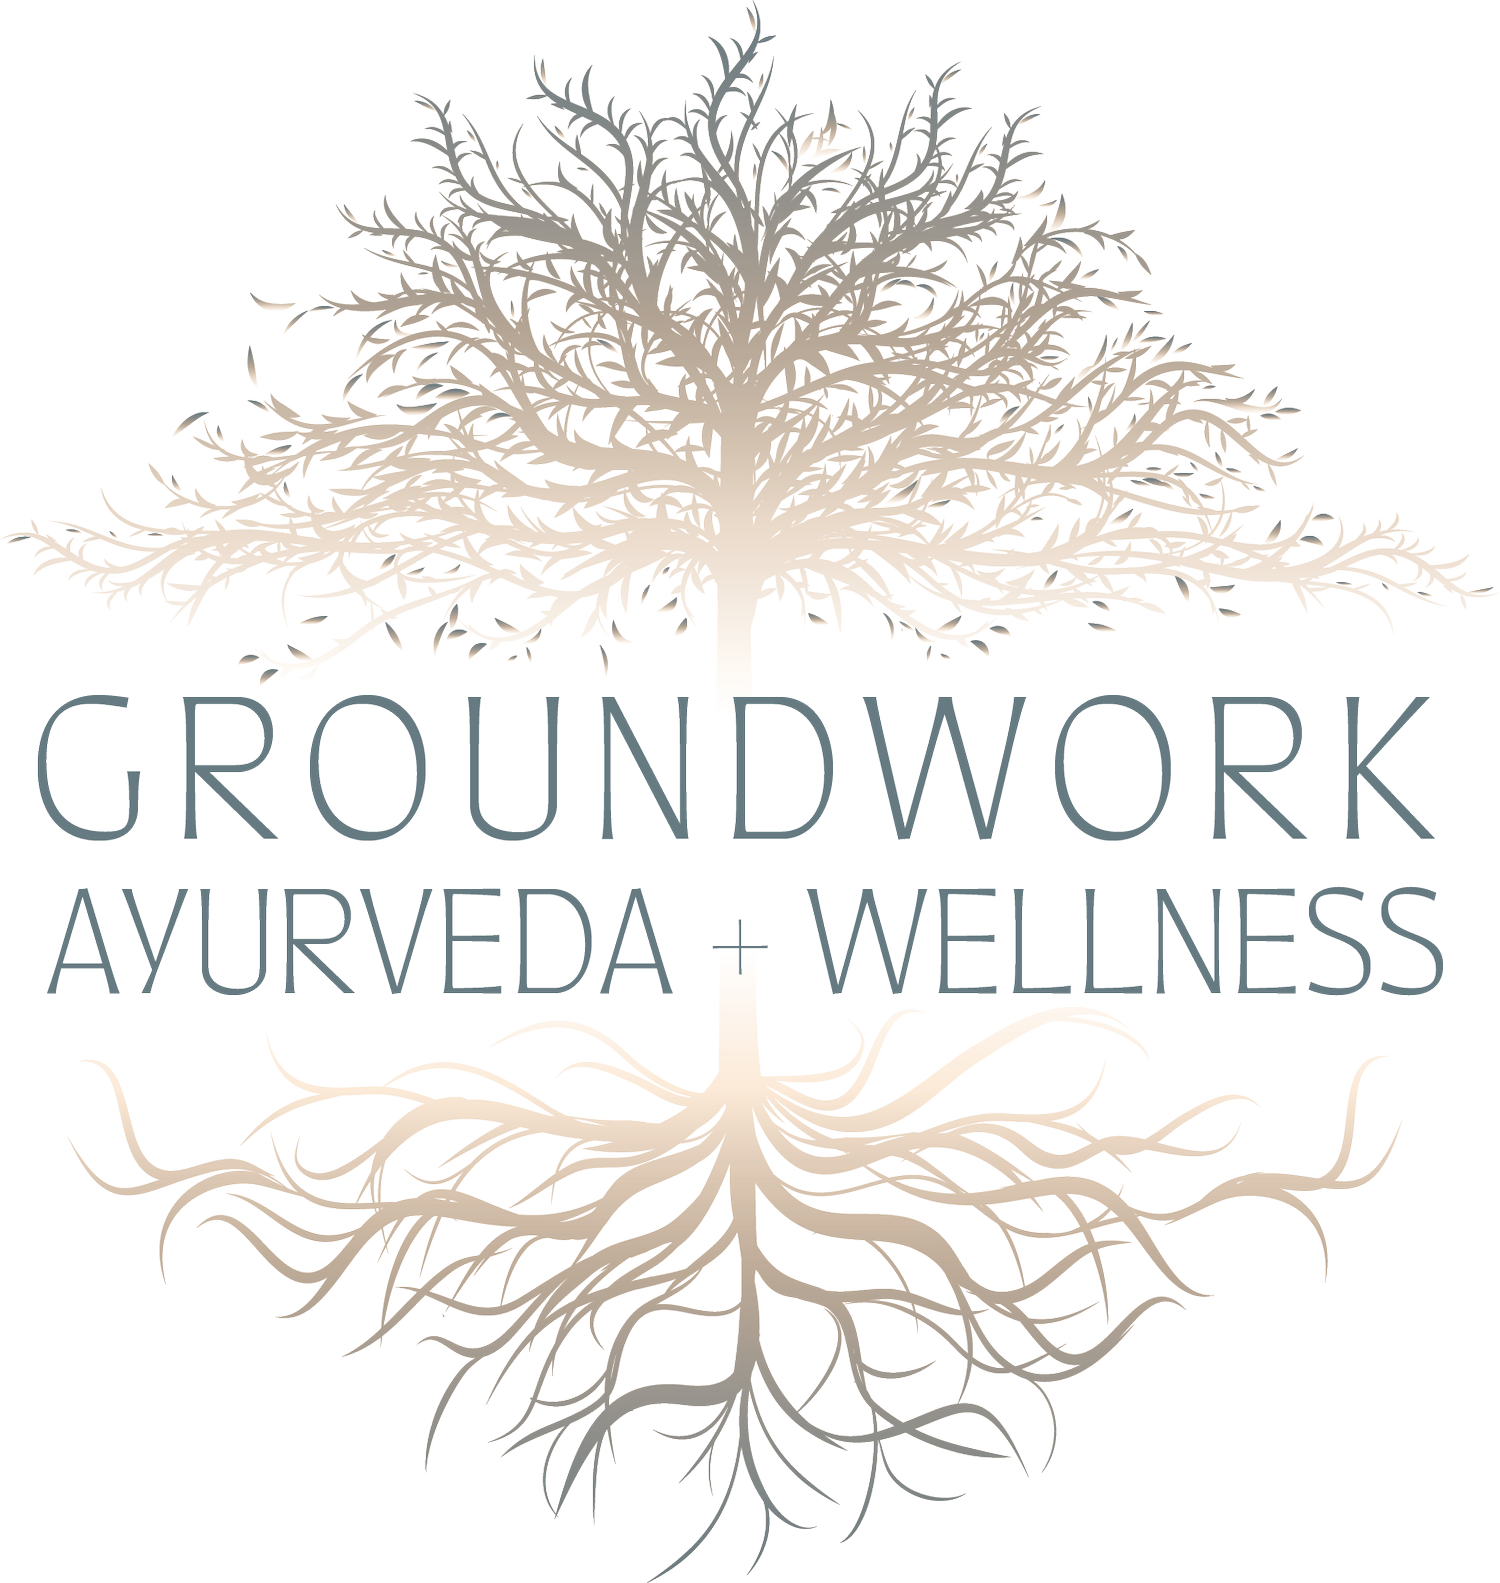 Groundwork Ayurveda + Wellness